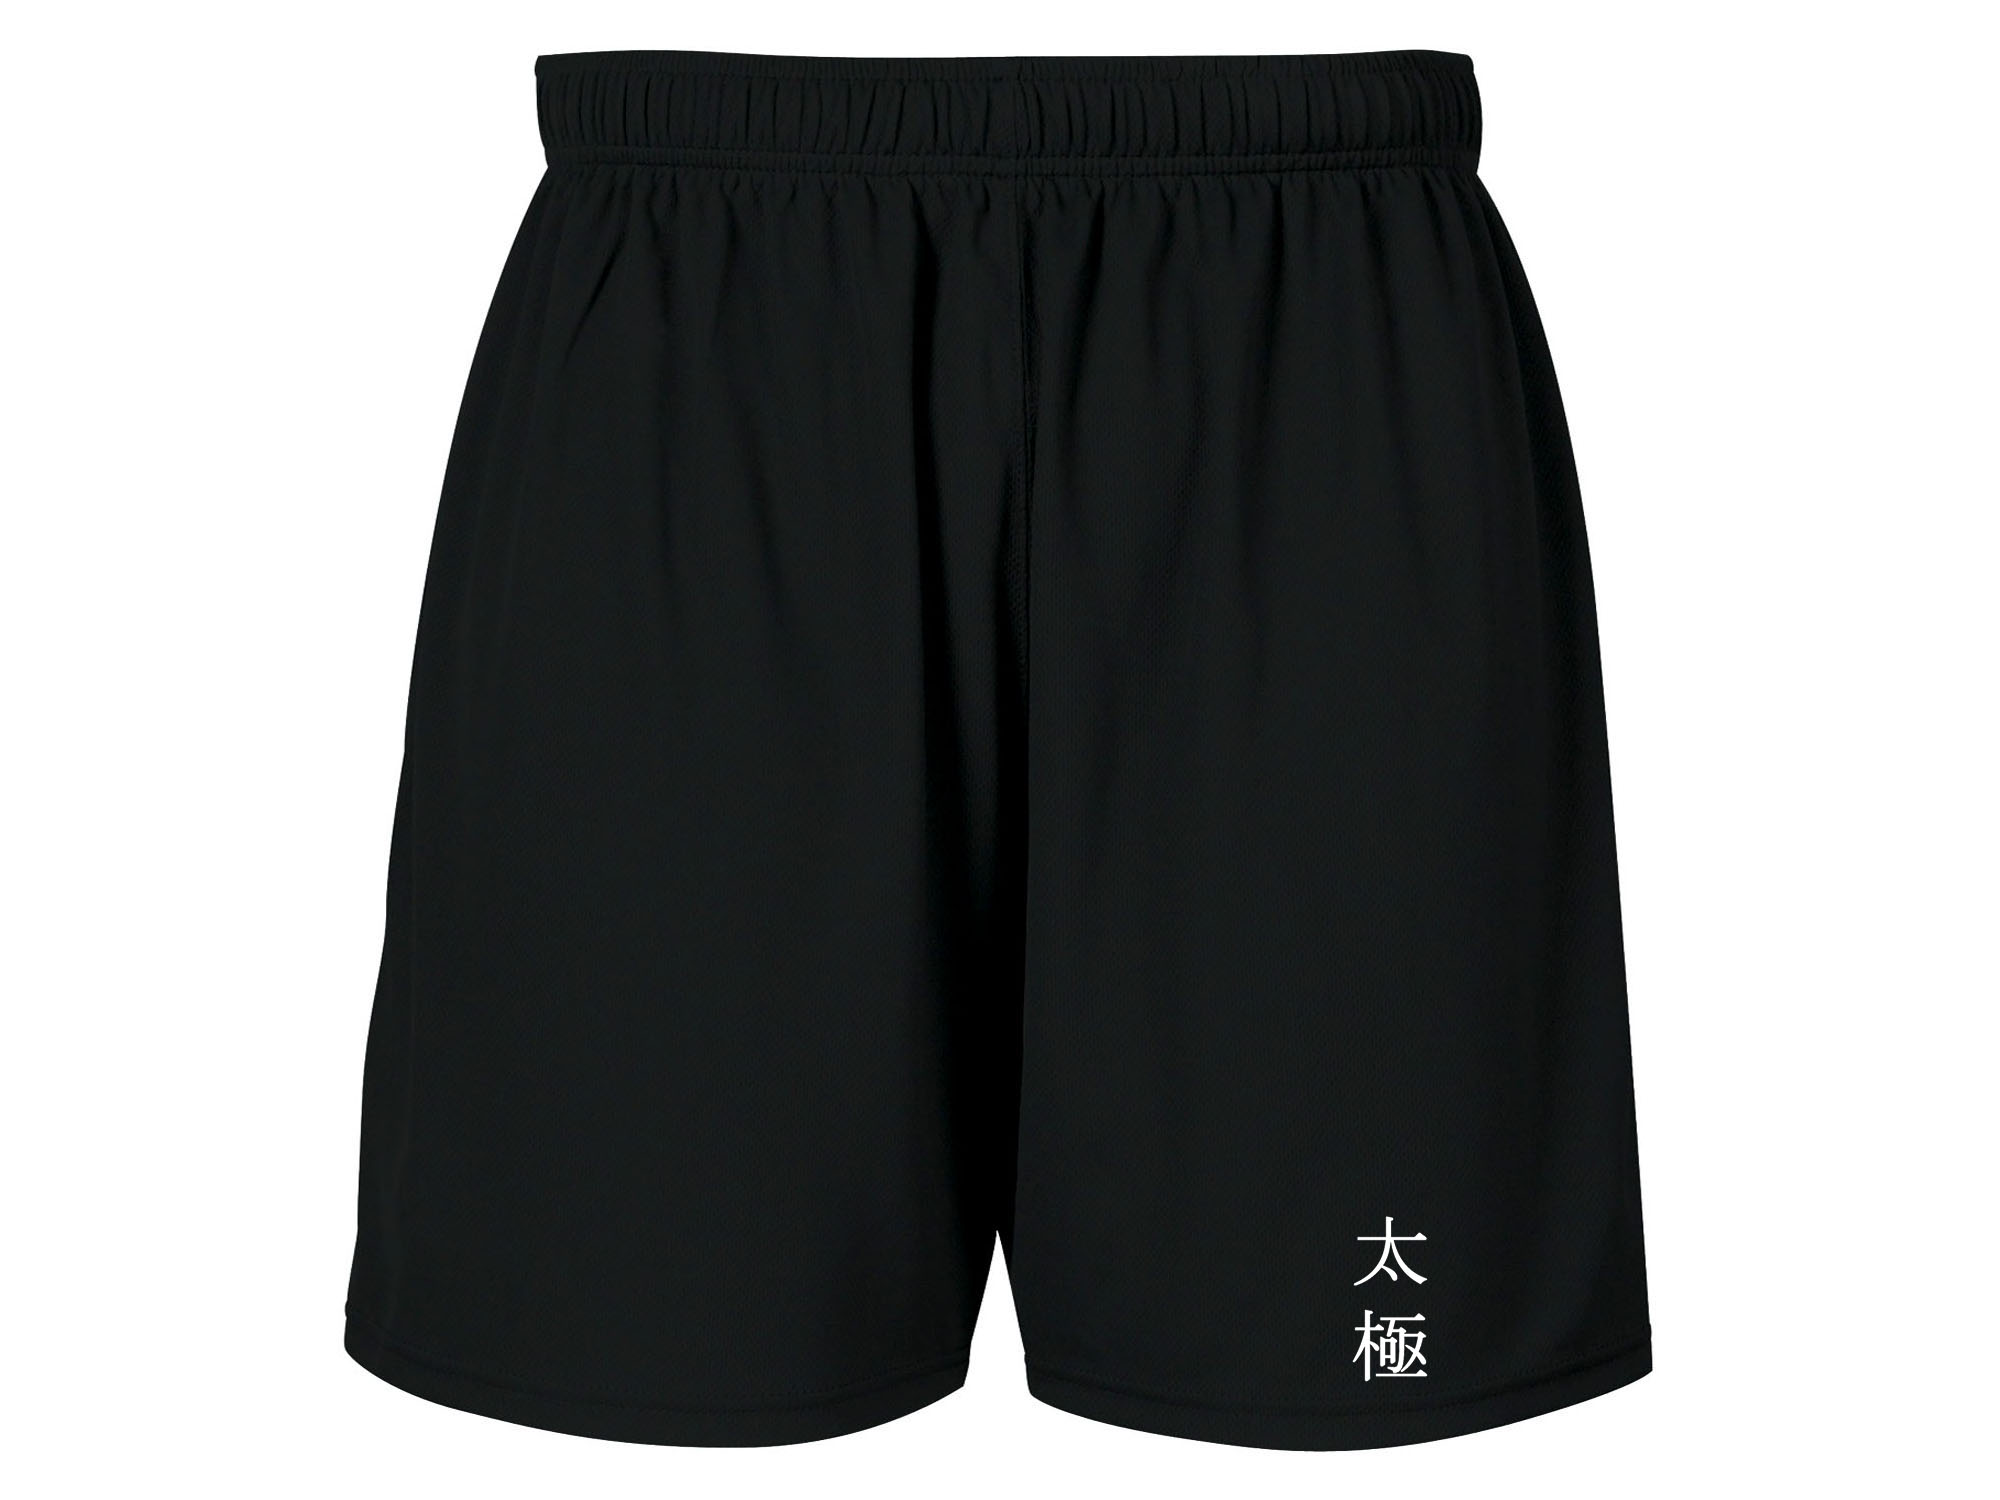 Tai Chi Martial arts sweat proof fabric shorts